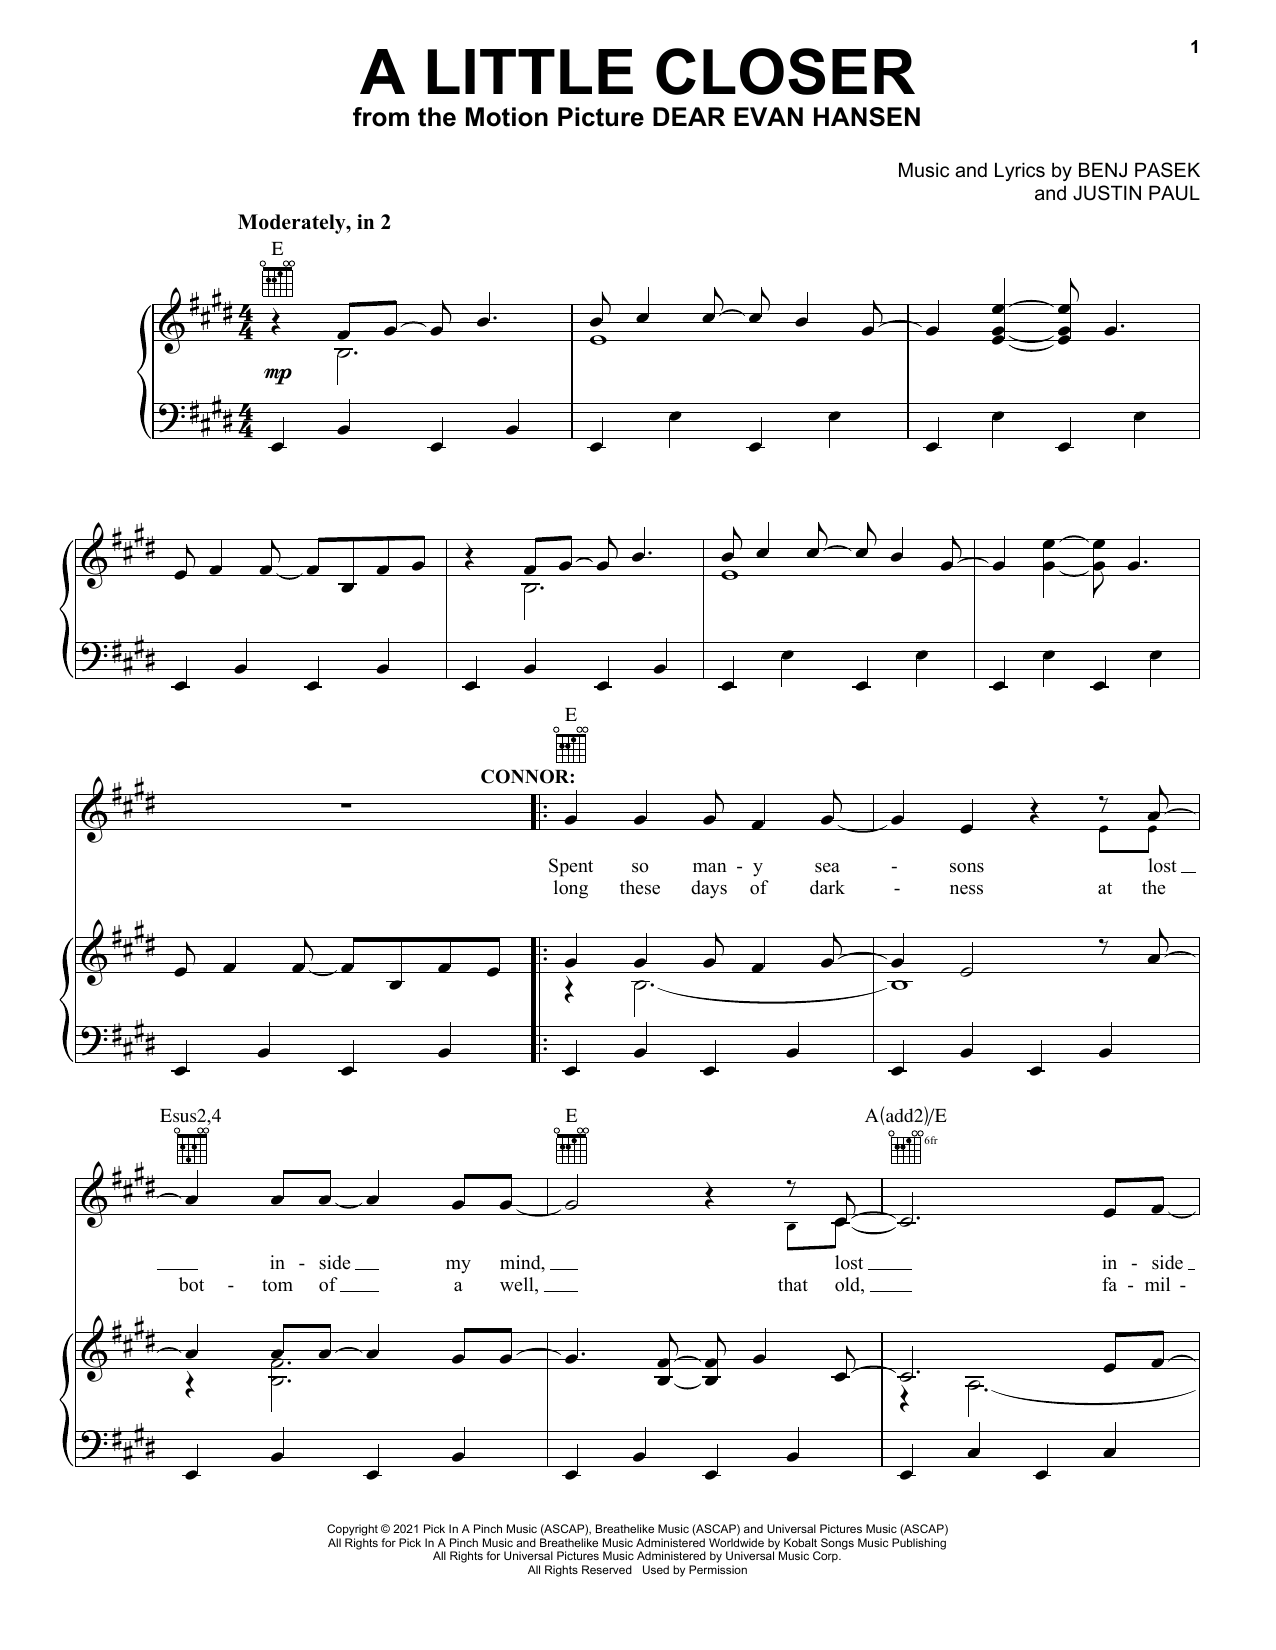 Pasek & Paul A Little Closer (from Dear Evan Hansen) Sheet Music Notes & Chords for Guitar Chords/Lyrics - Download or Print PDF